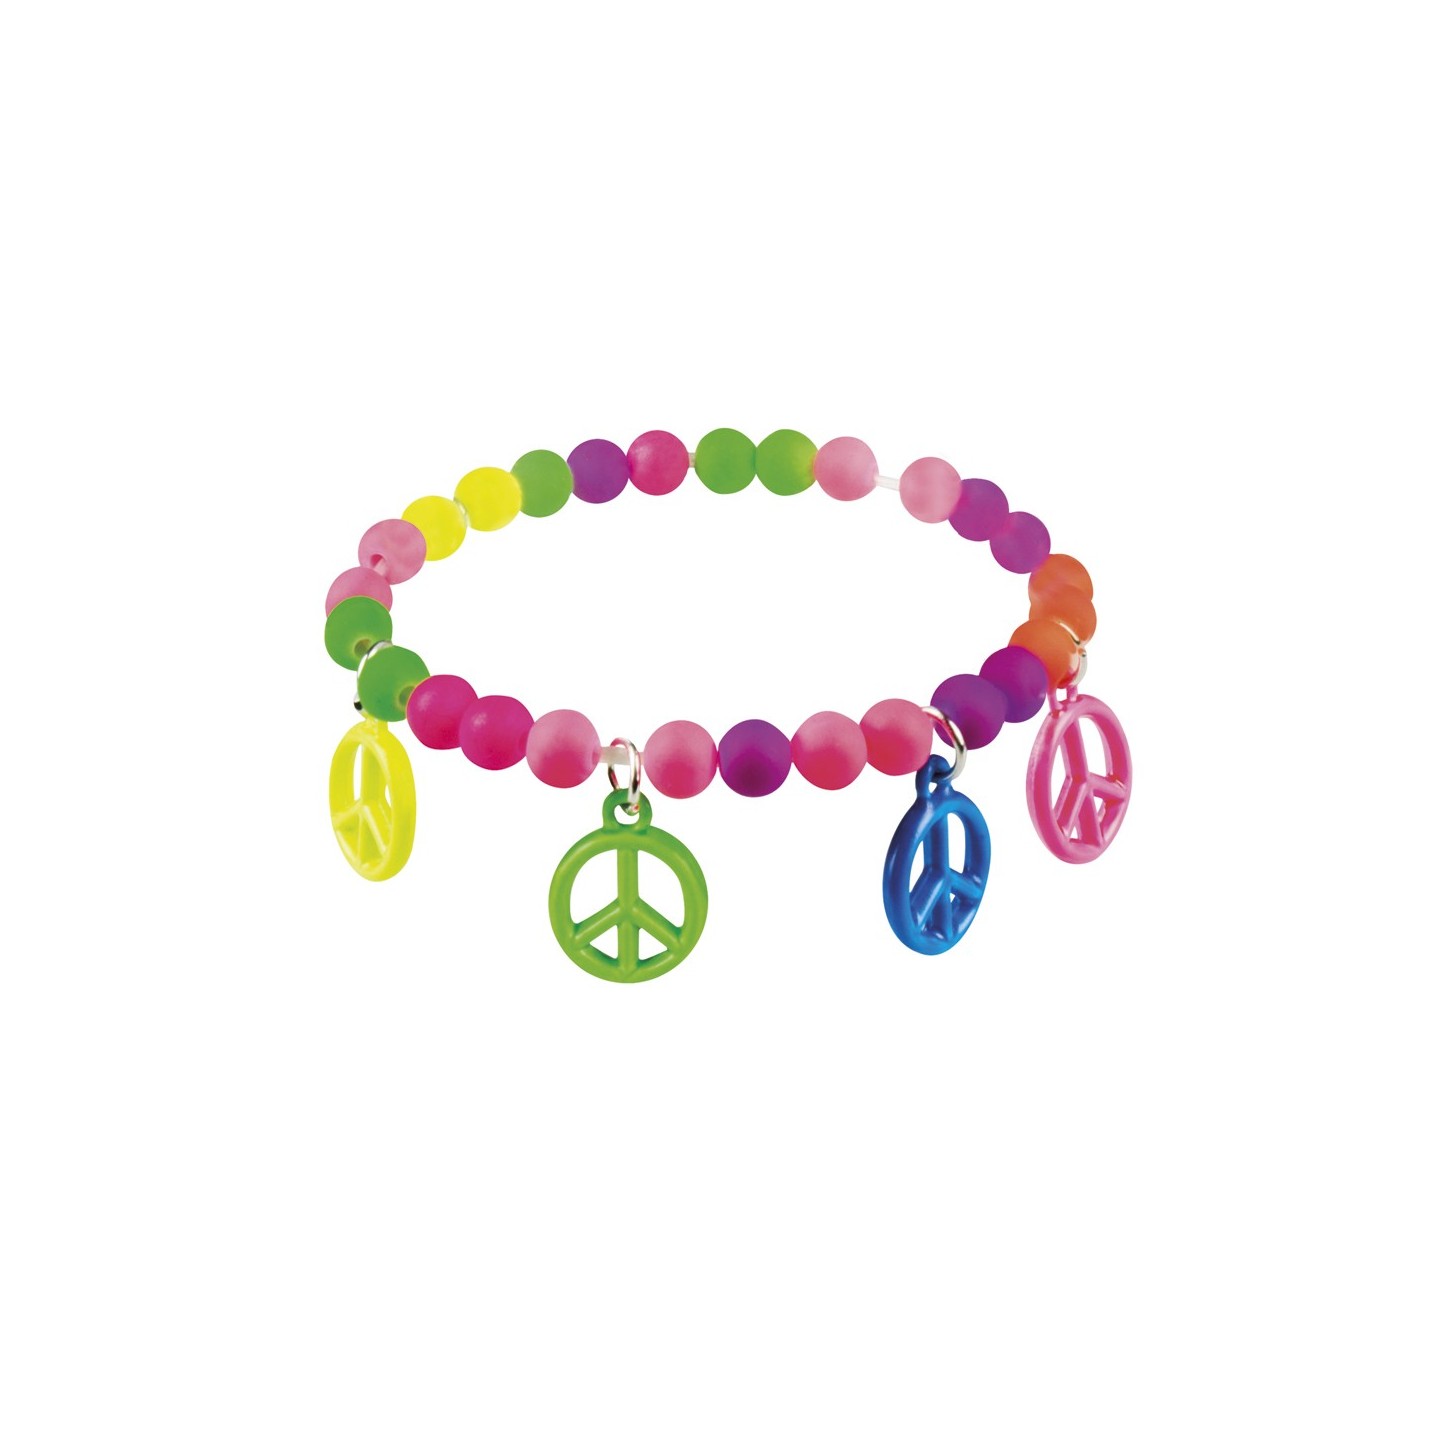 Hippie armbnd peace teken row